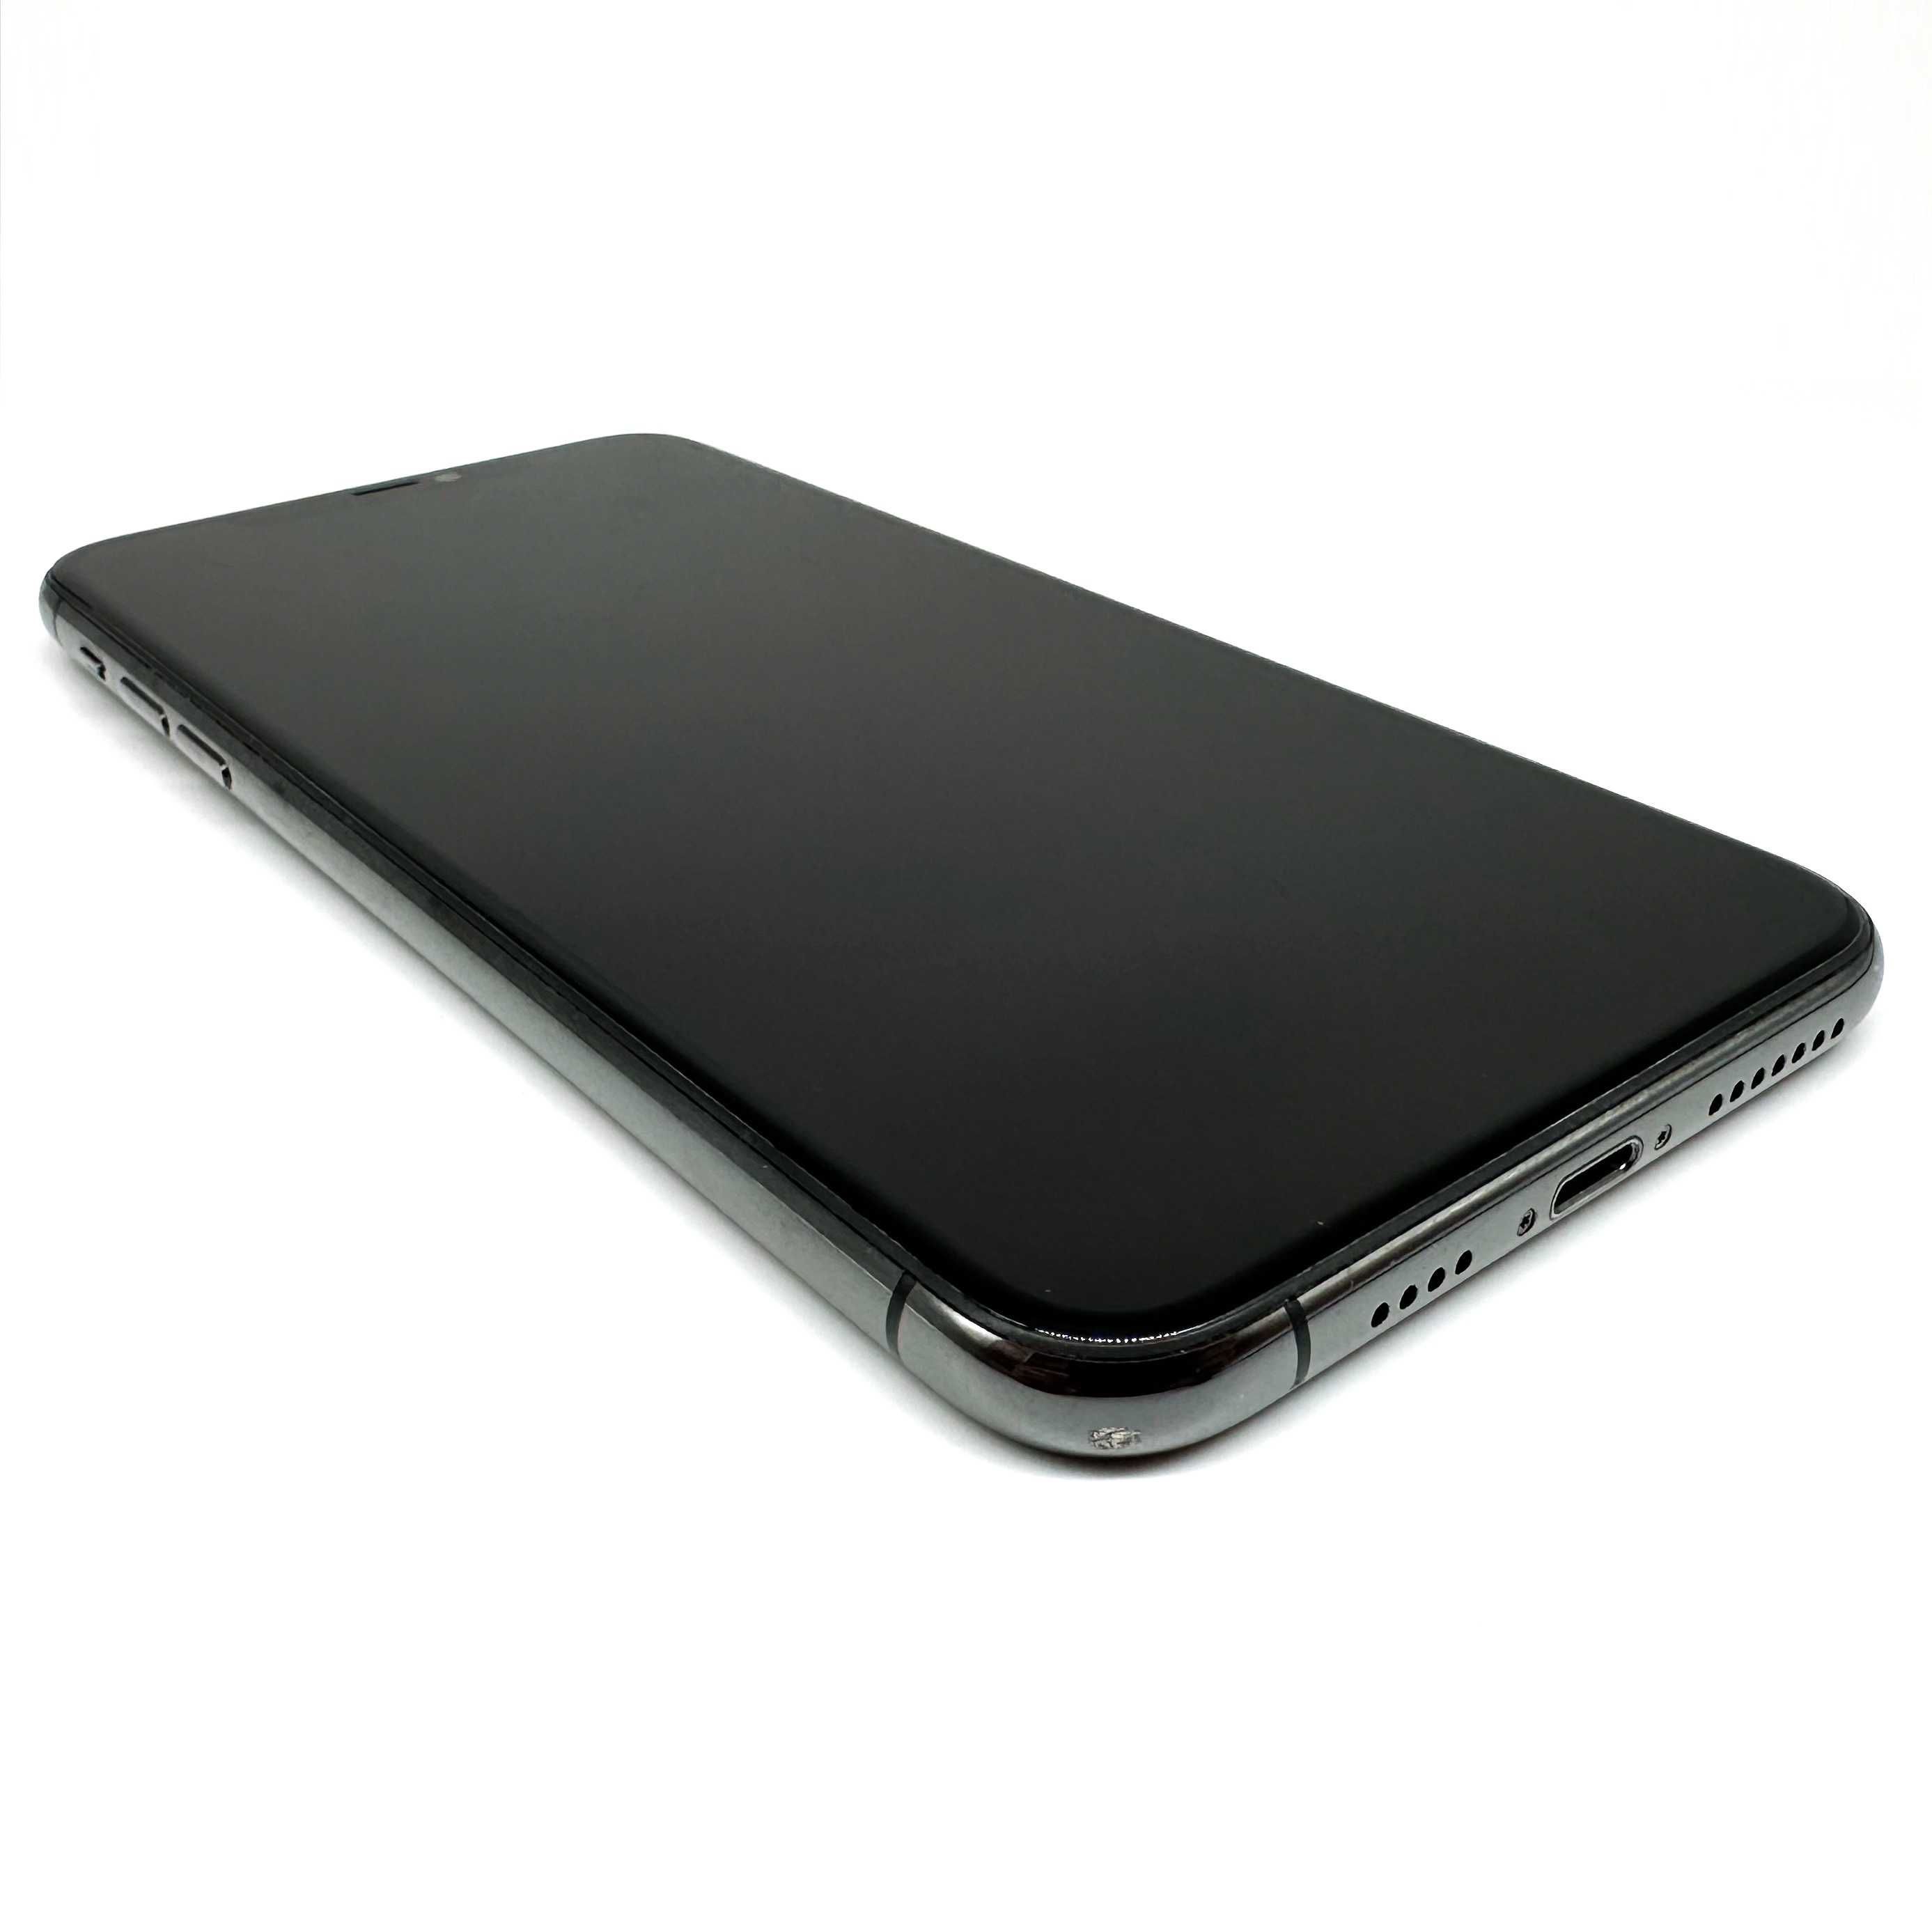 iPhone 11 Pro Max 64GB Szary Gray Bateria 82% W-wa Żelazna 89